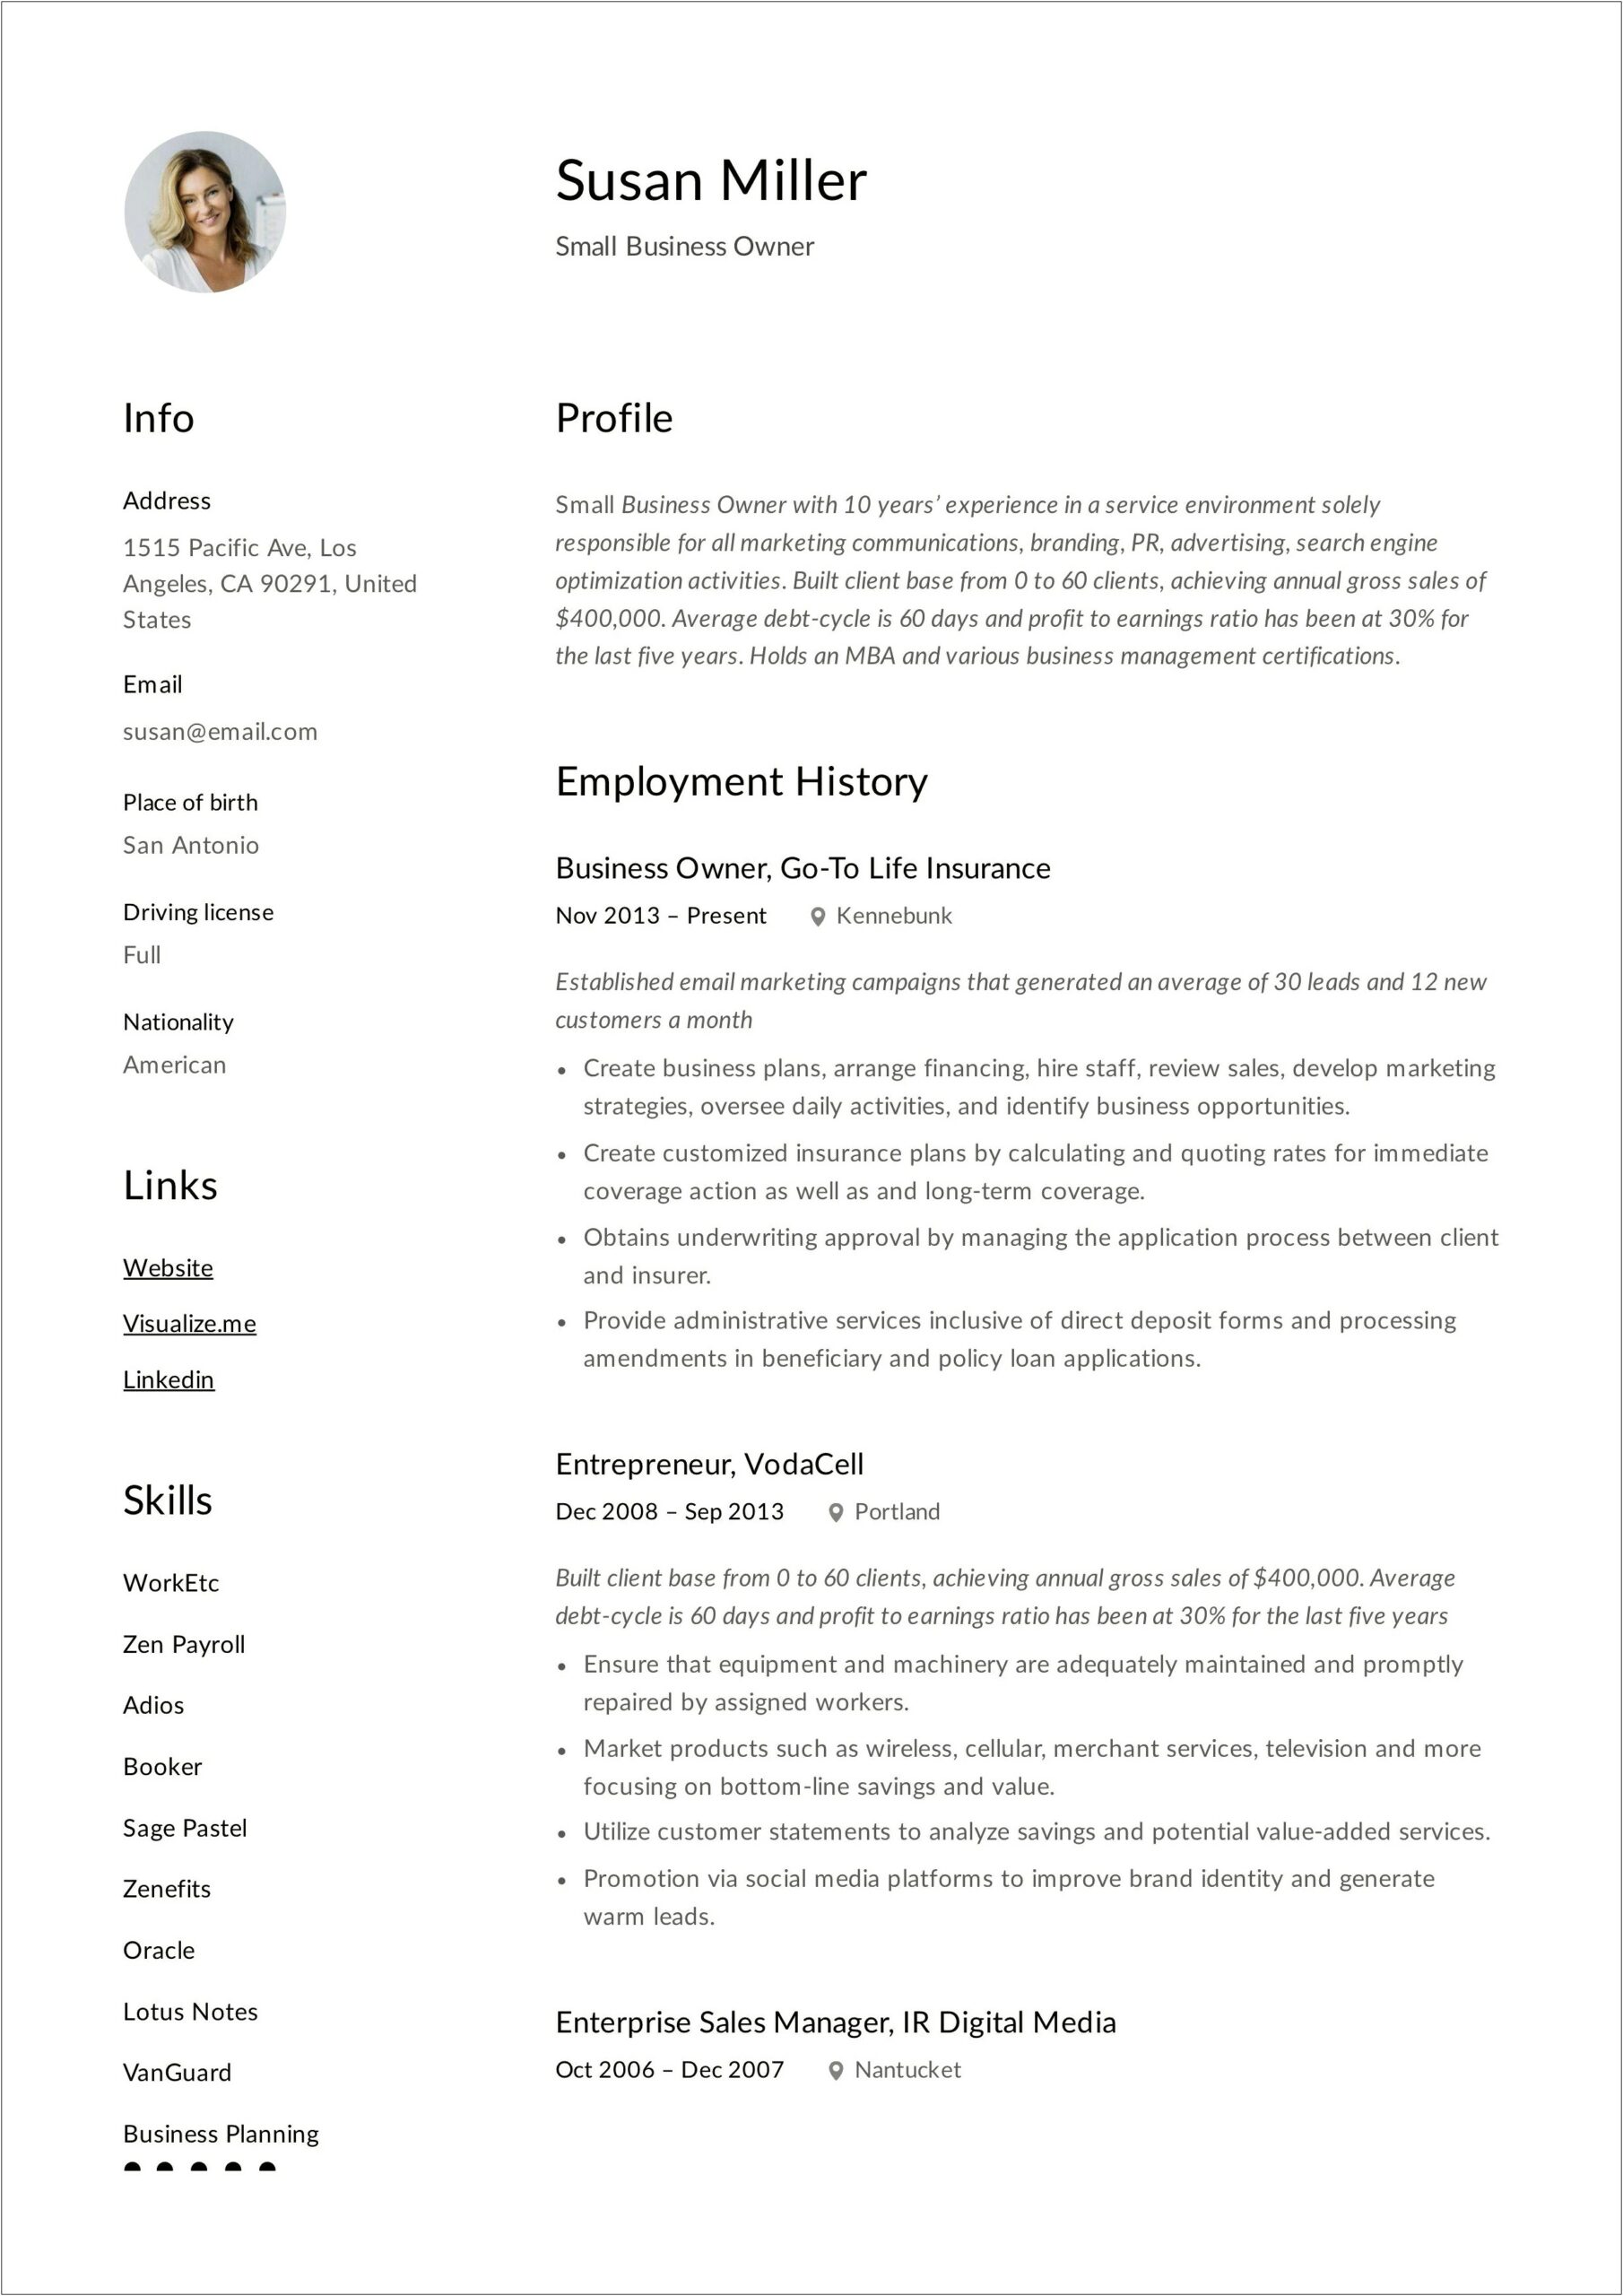 Sample Resume For Former Business Owner